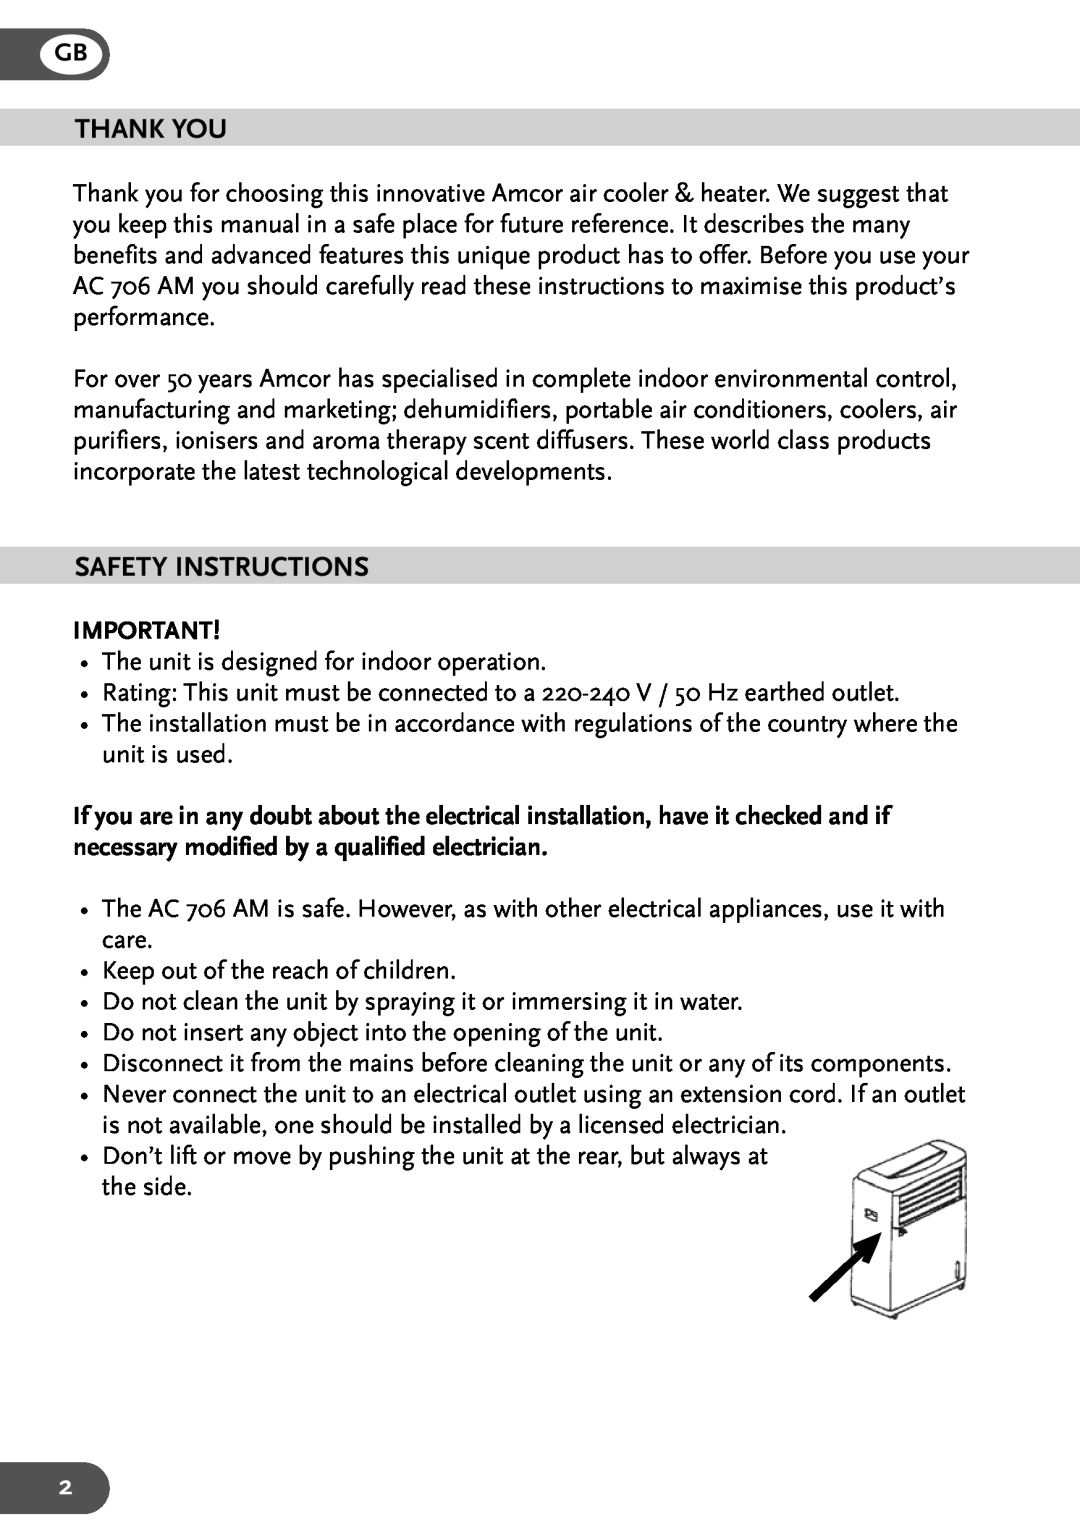 Amcor AC 706 AM manual Thank You, Safety Instructions 